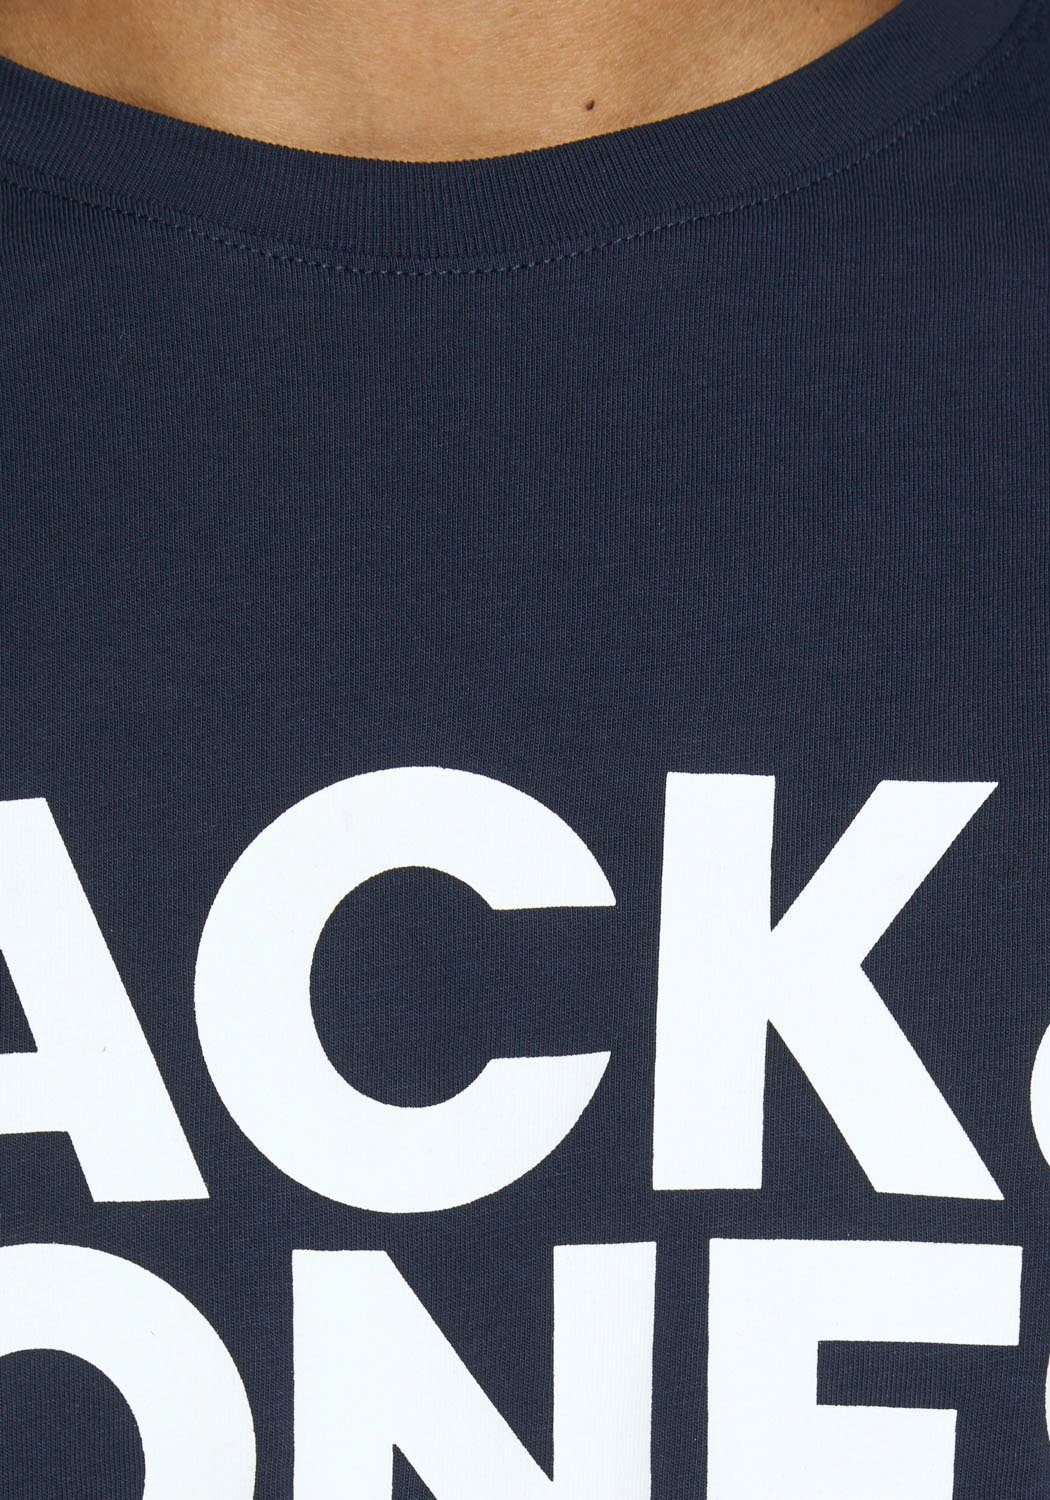 TEE T-Shirt CORP navy mit LOGO Jones & Logoprint Jack